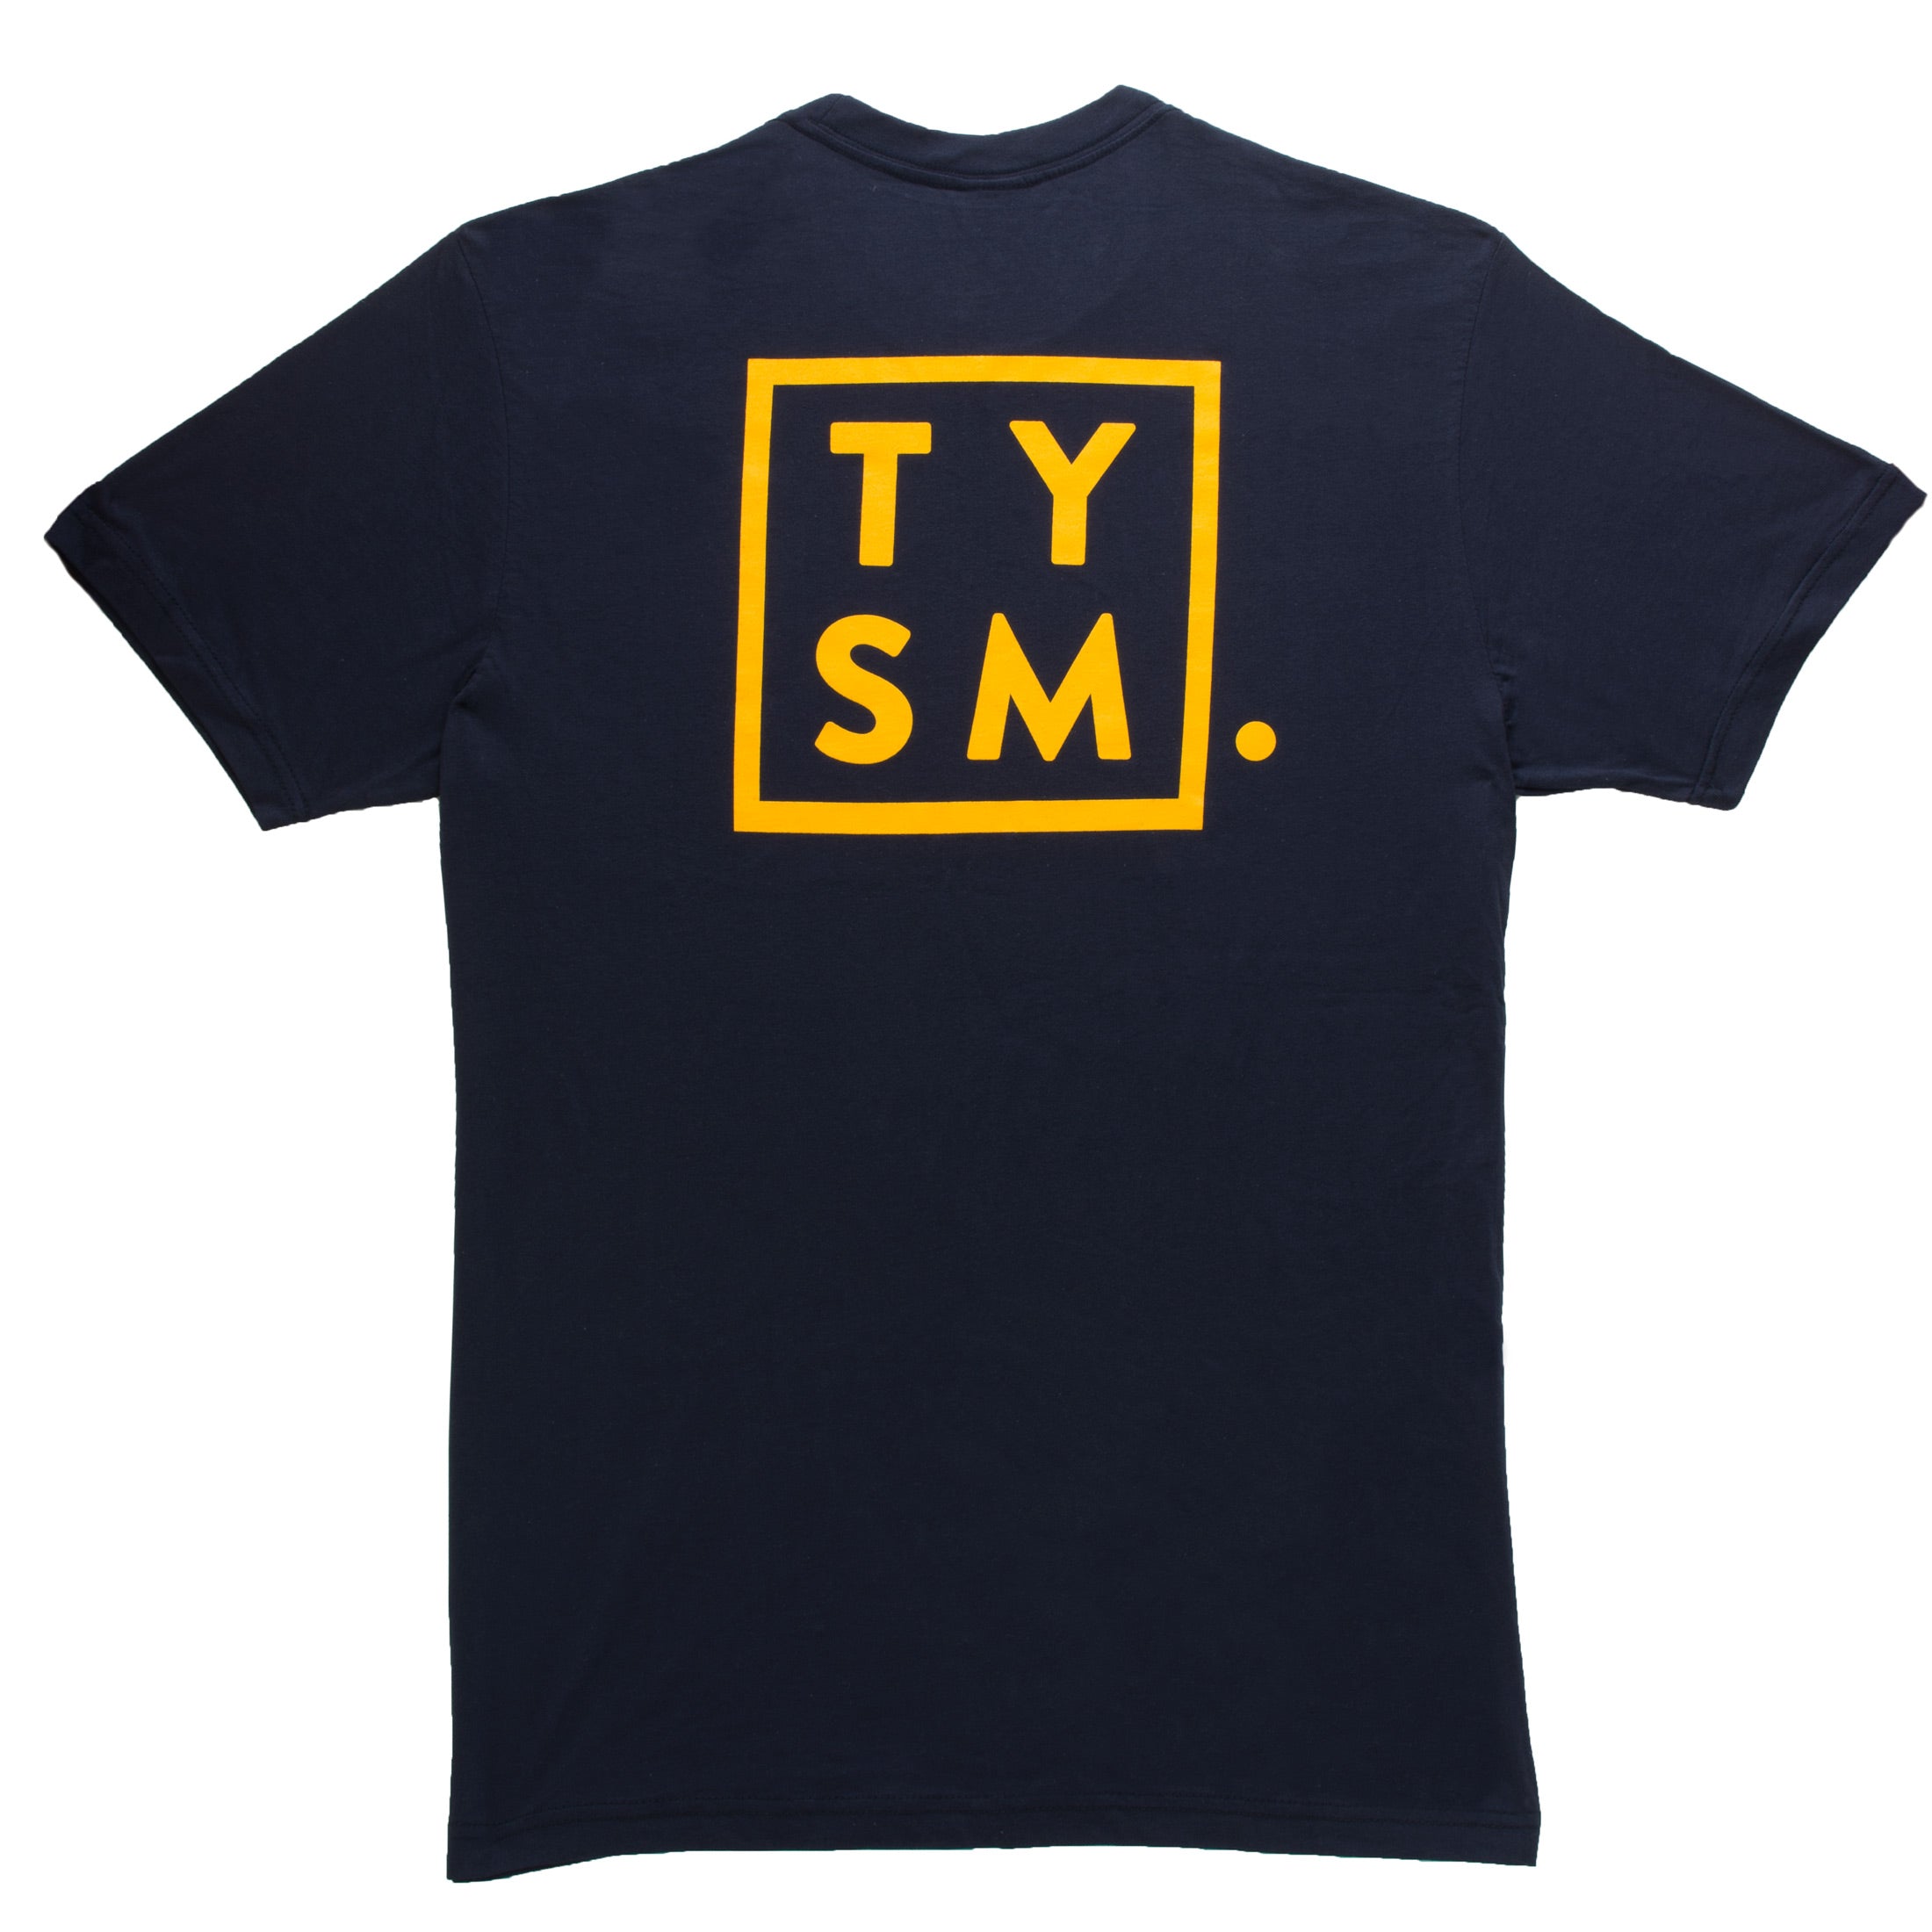 TYSM Box Tee Navy/Gold - thankyouapparel